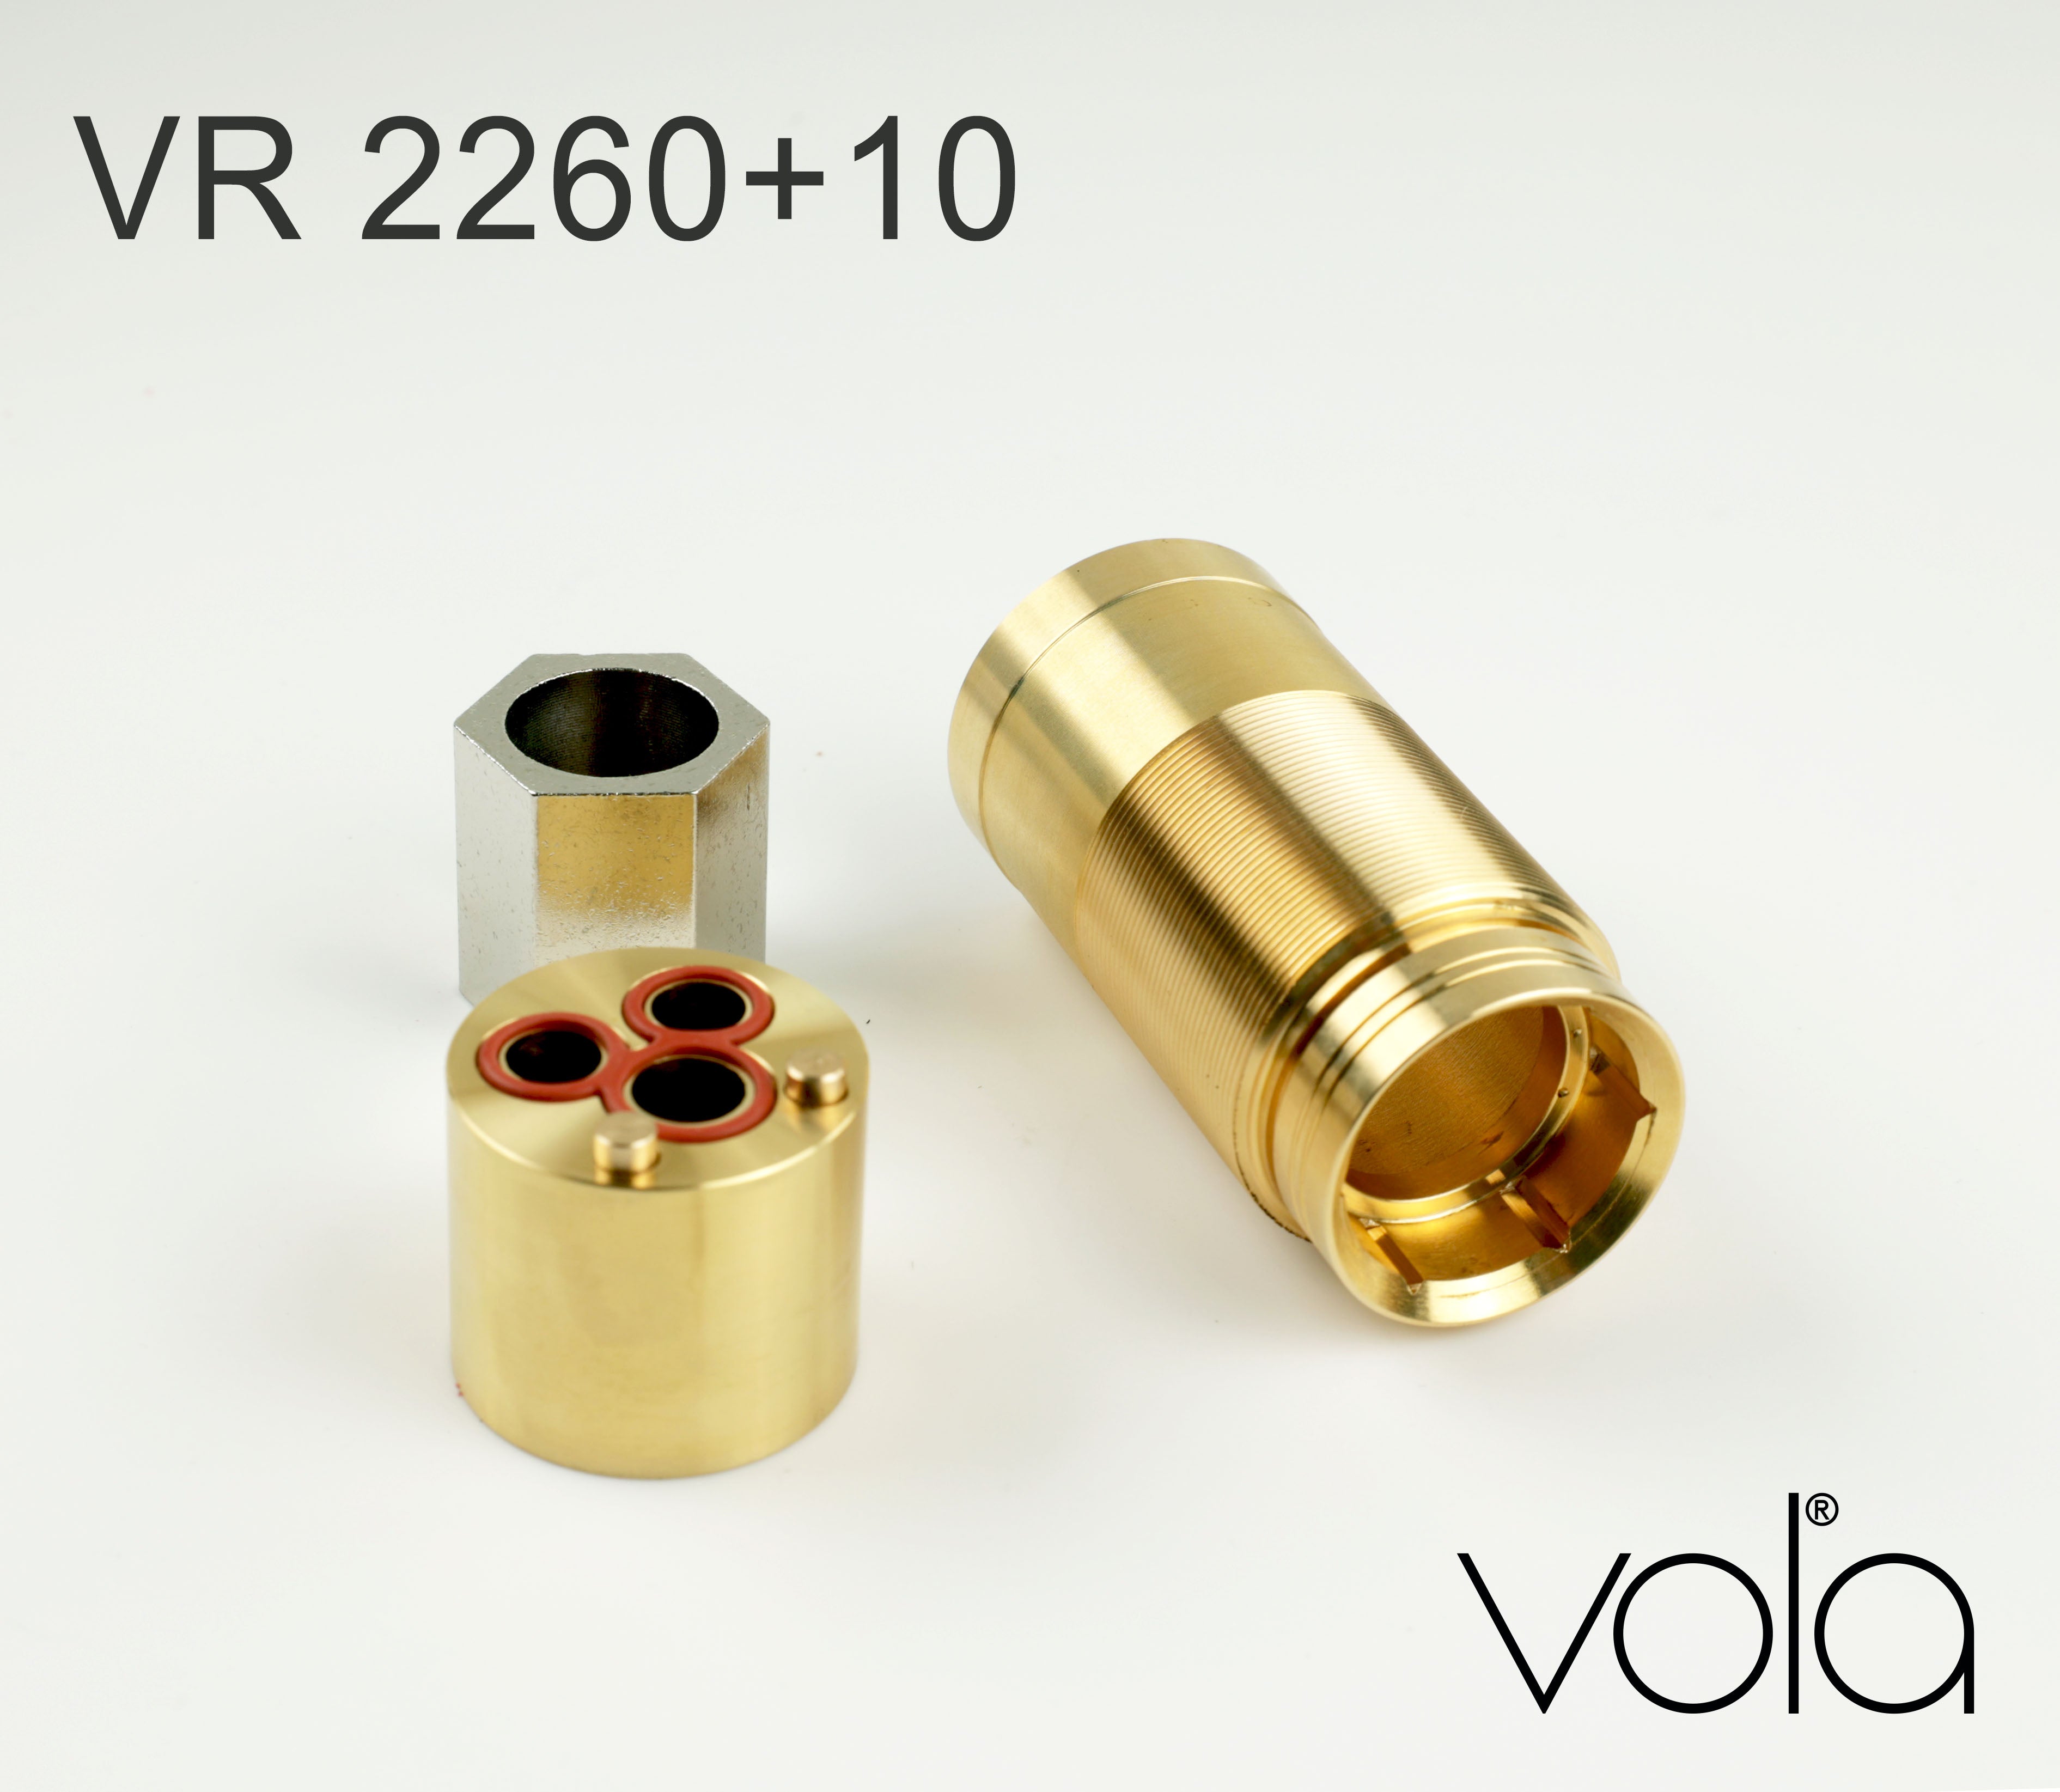 VOLA VR2260+10